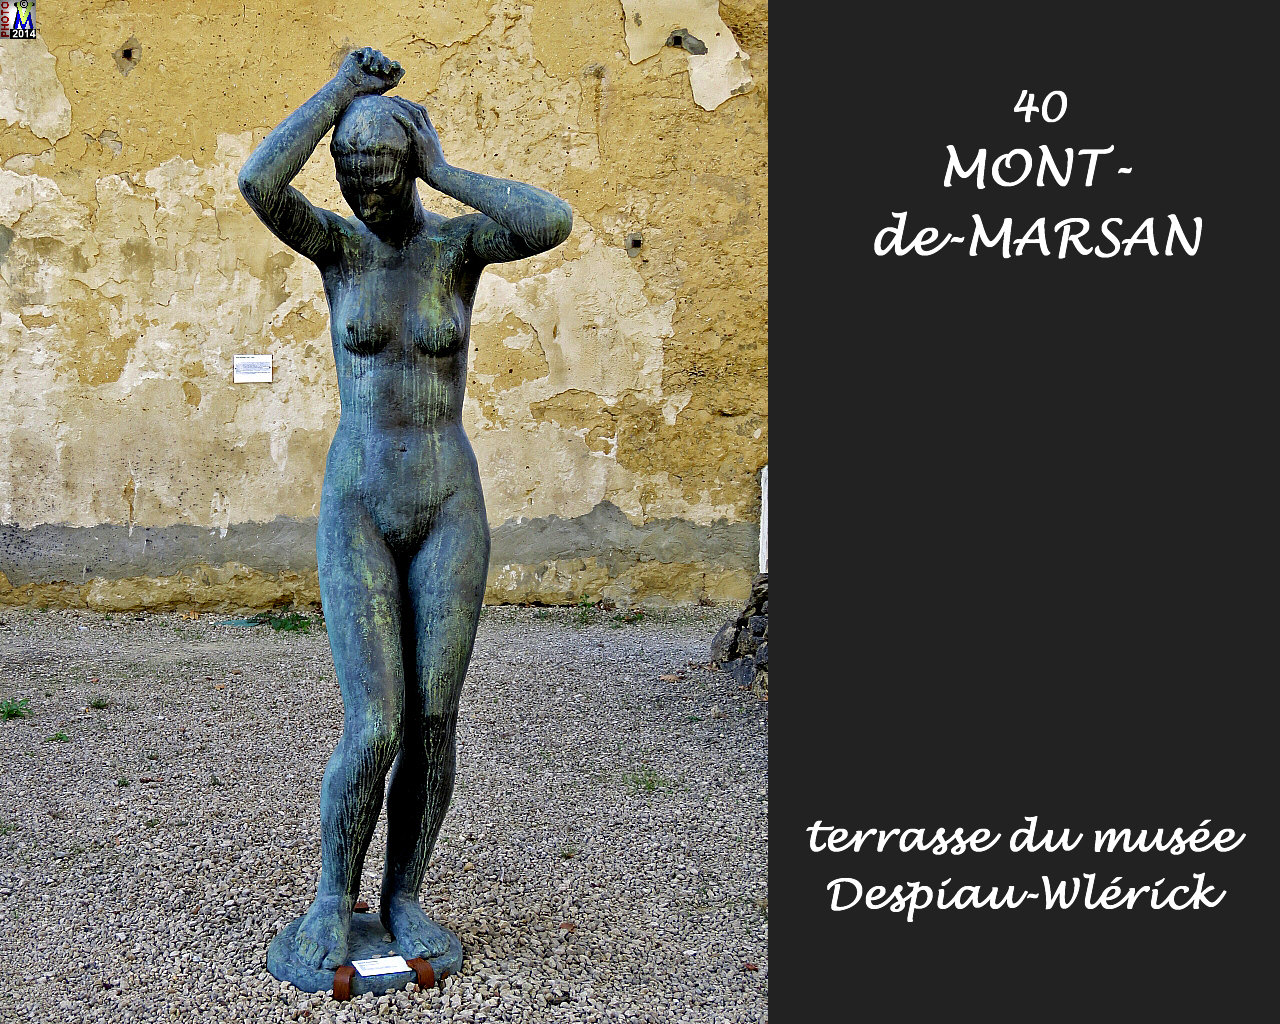 40MONT-MARSAN_terrassemusee_108.jpg